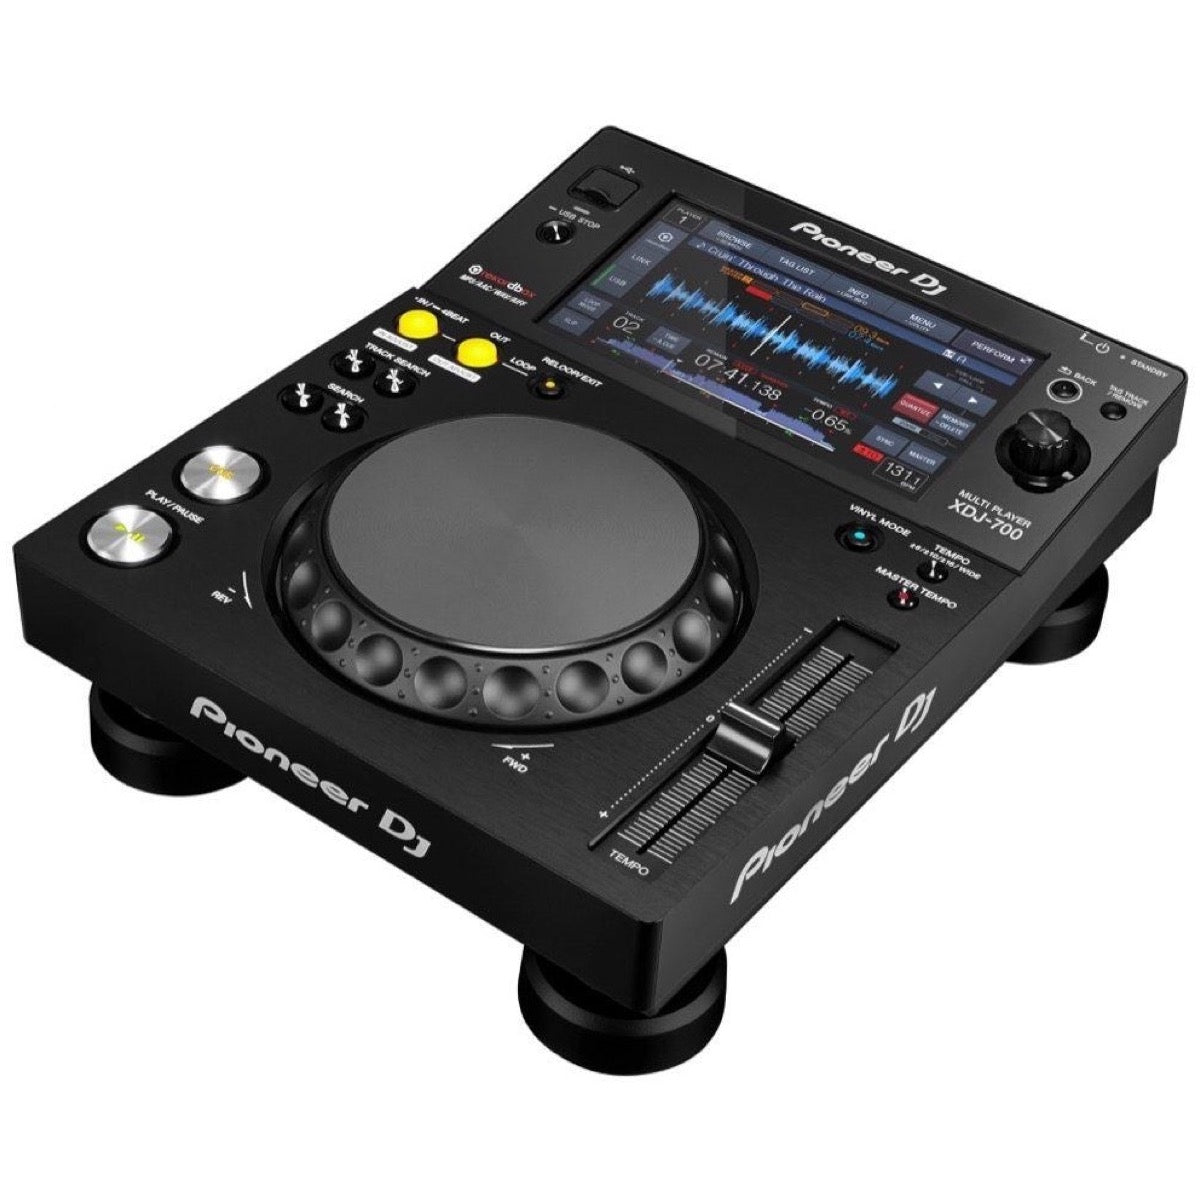 Pioneer XDJ-700 Portable DJ Media Player